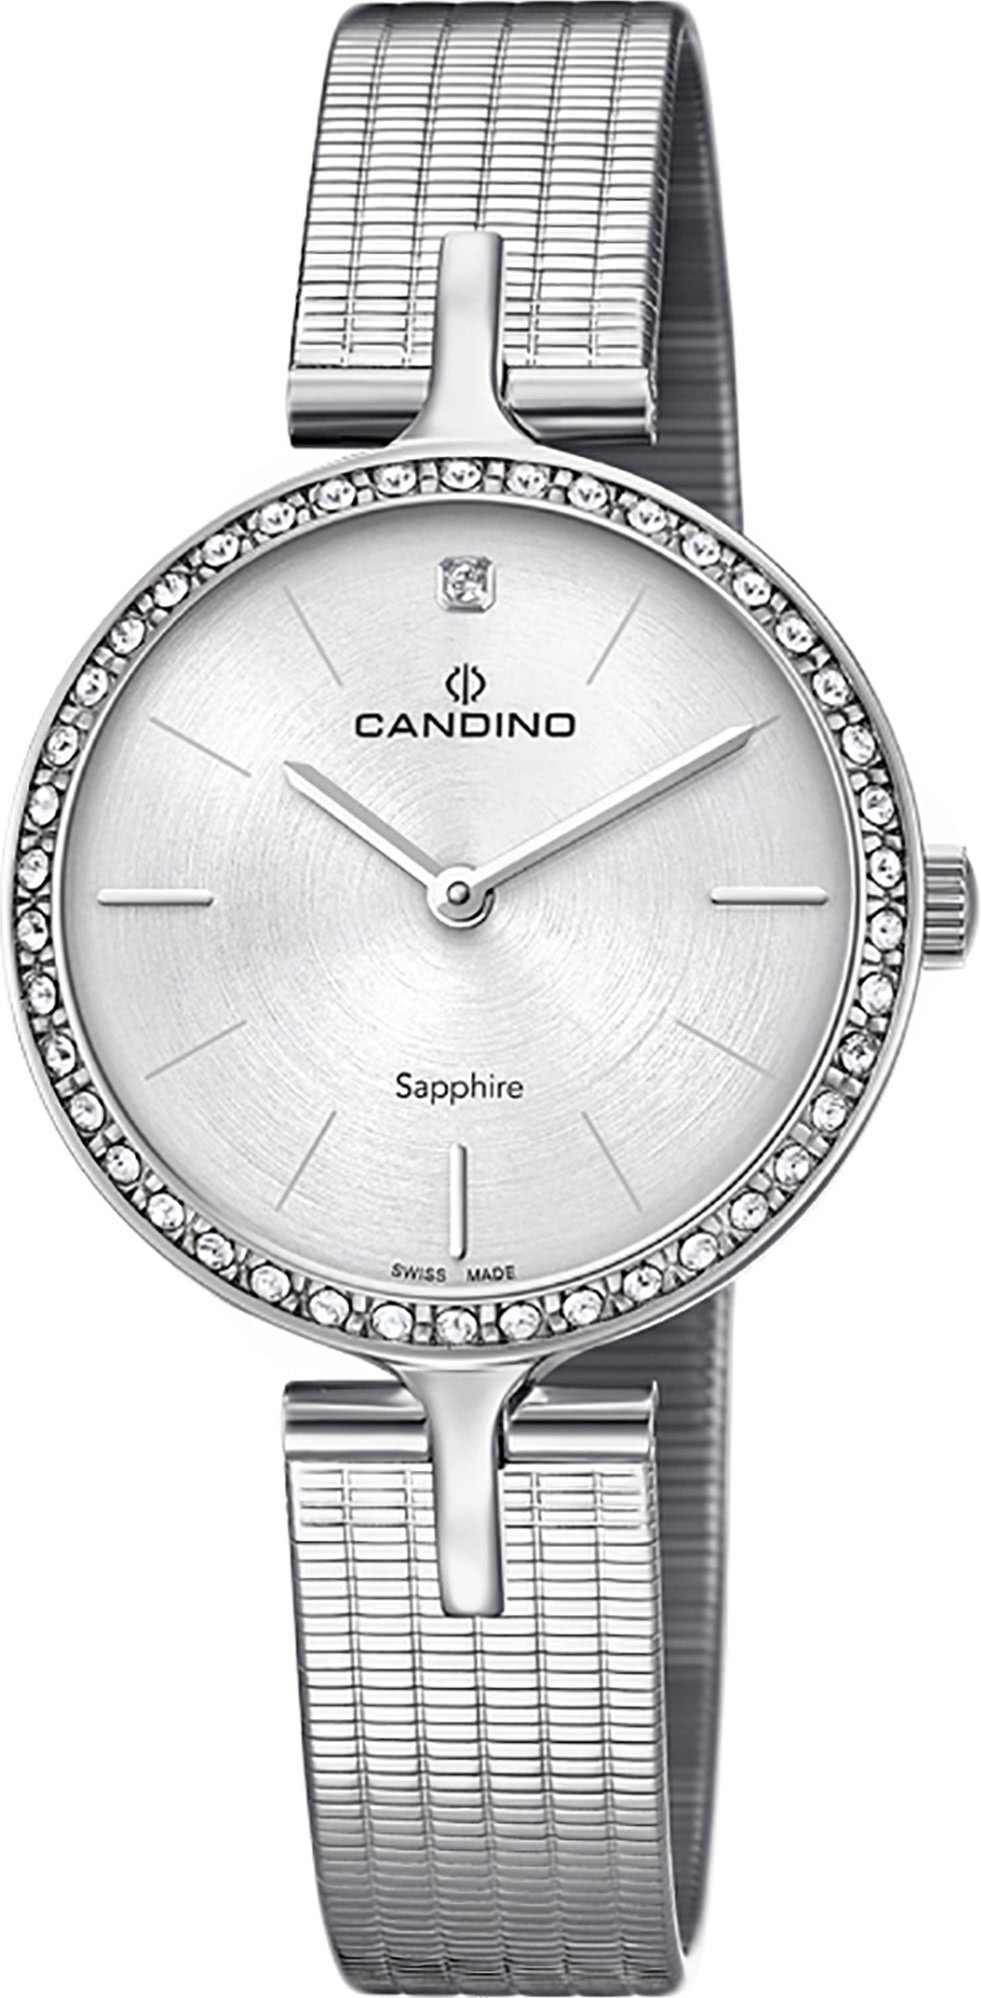 Candino Quarzuhr Candino Damen Uhr Analog C4646/1, Damen Armbanduhr rund, Edelstahlarmband silber, Fashion